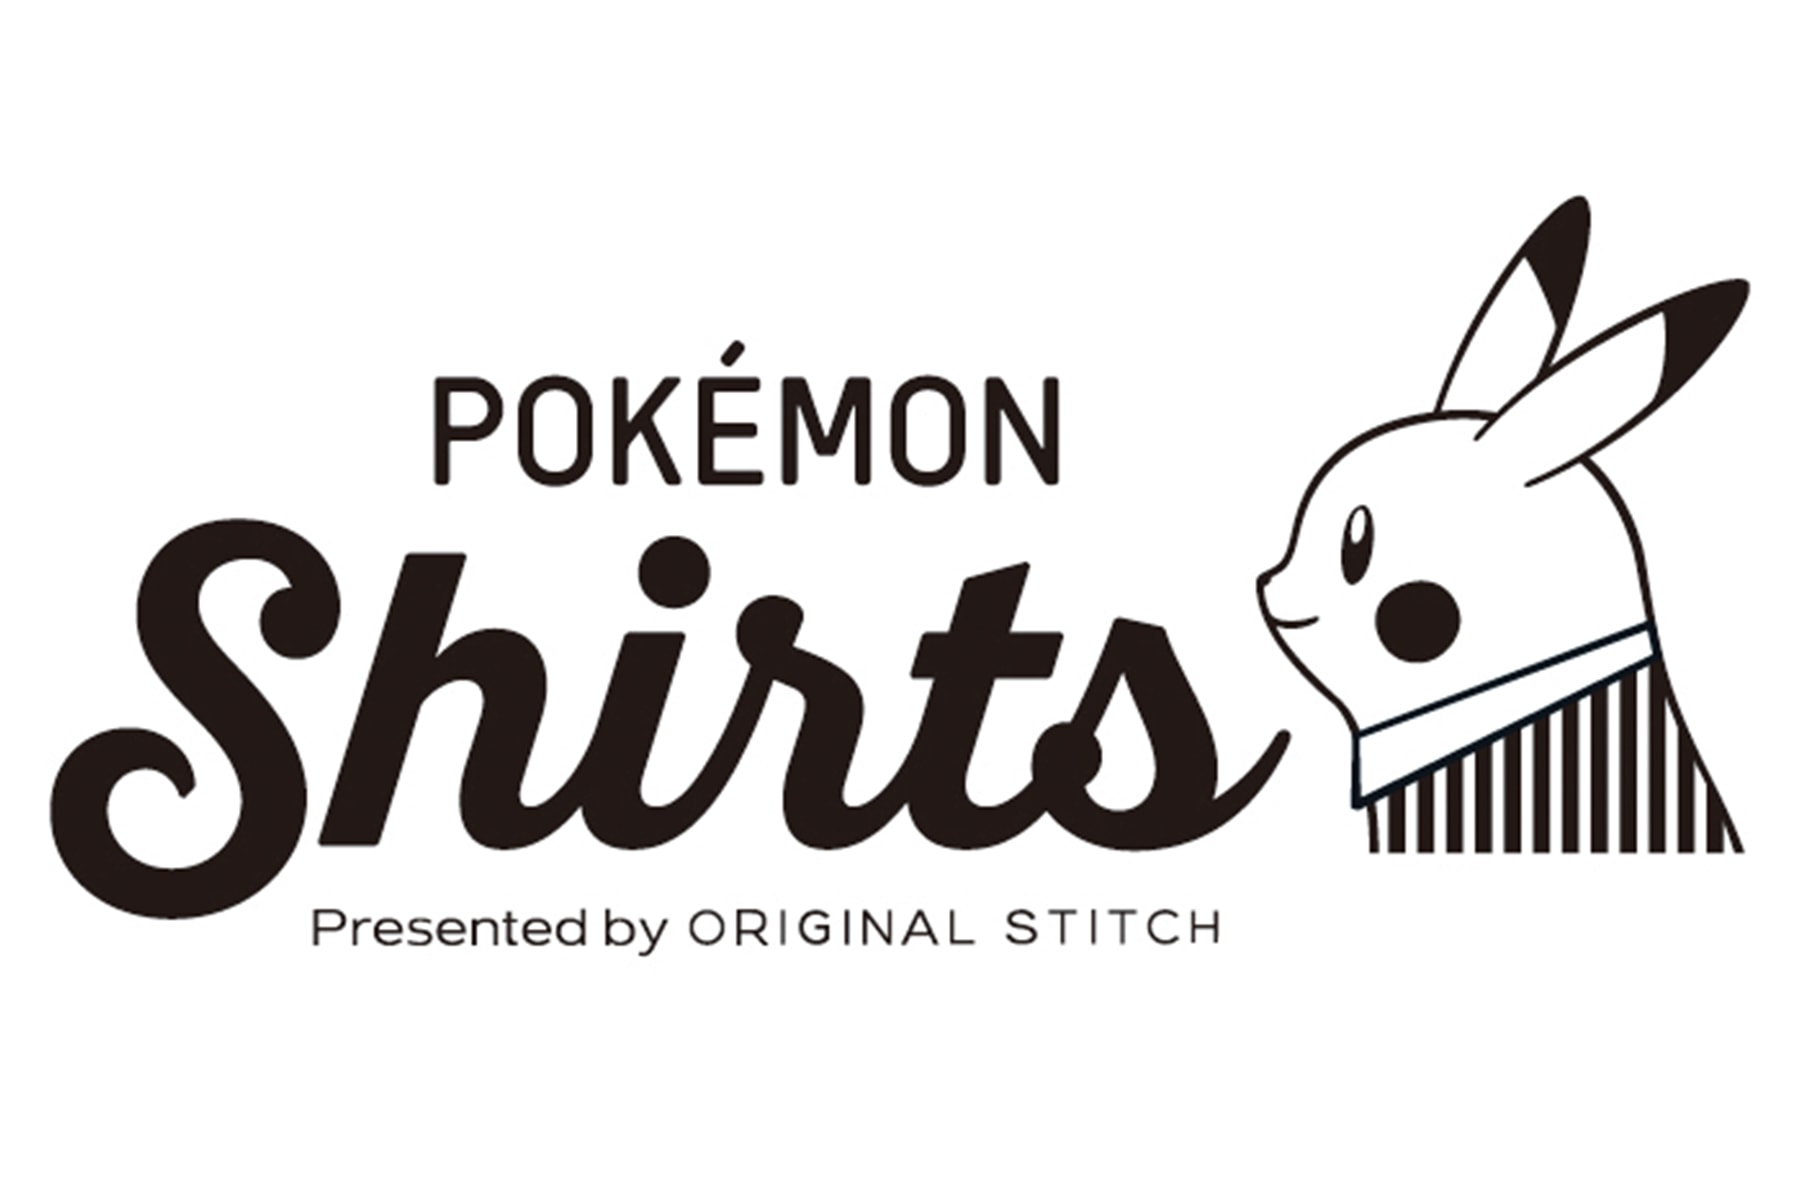 Pokémon Shirts ポケモン シャツ ポップアップ 長場雄 エリックエルムズ Original Stitch オリジナルスティッチ ポケットモンスター